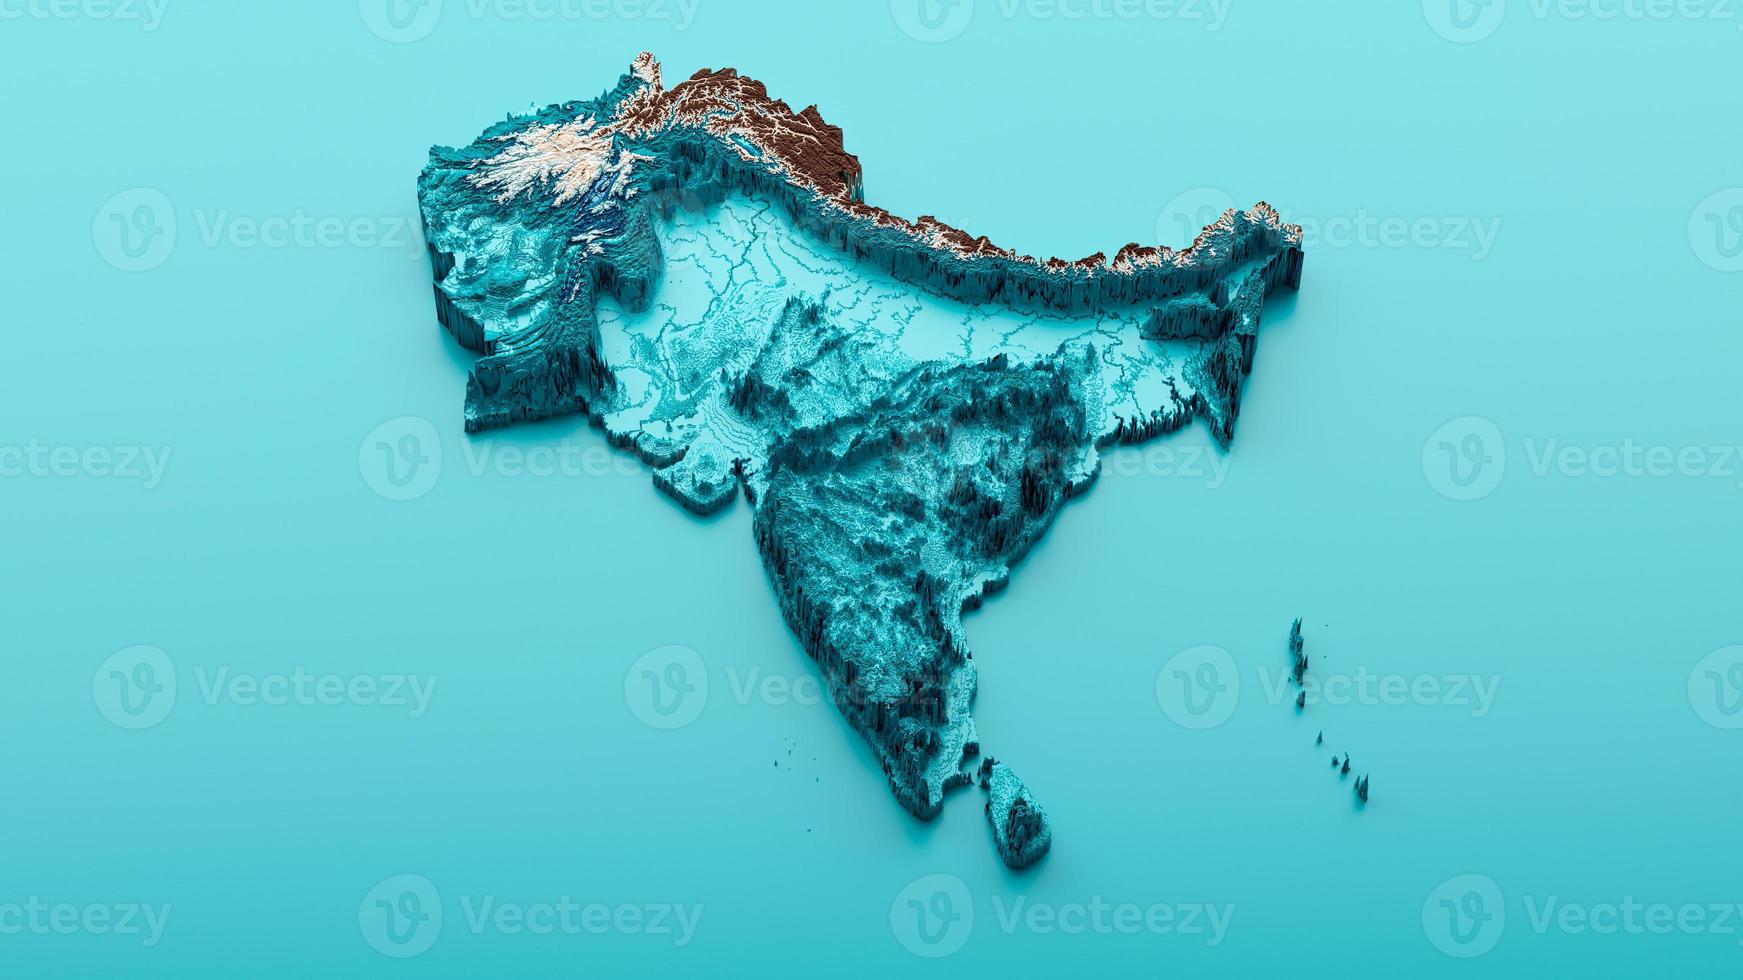 Topographic Subcontinent Map Hypsometric countries India, Pakistan, Nepal, Bhutan, Bangladesh, Sri Lanka, and the Maldives. 3d illustration photo